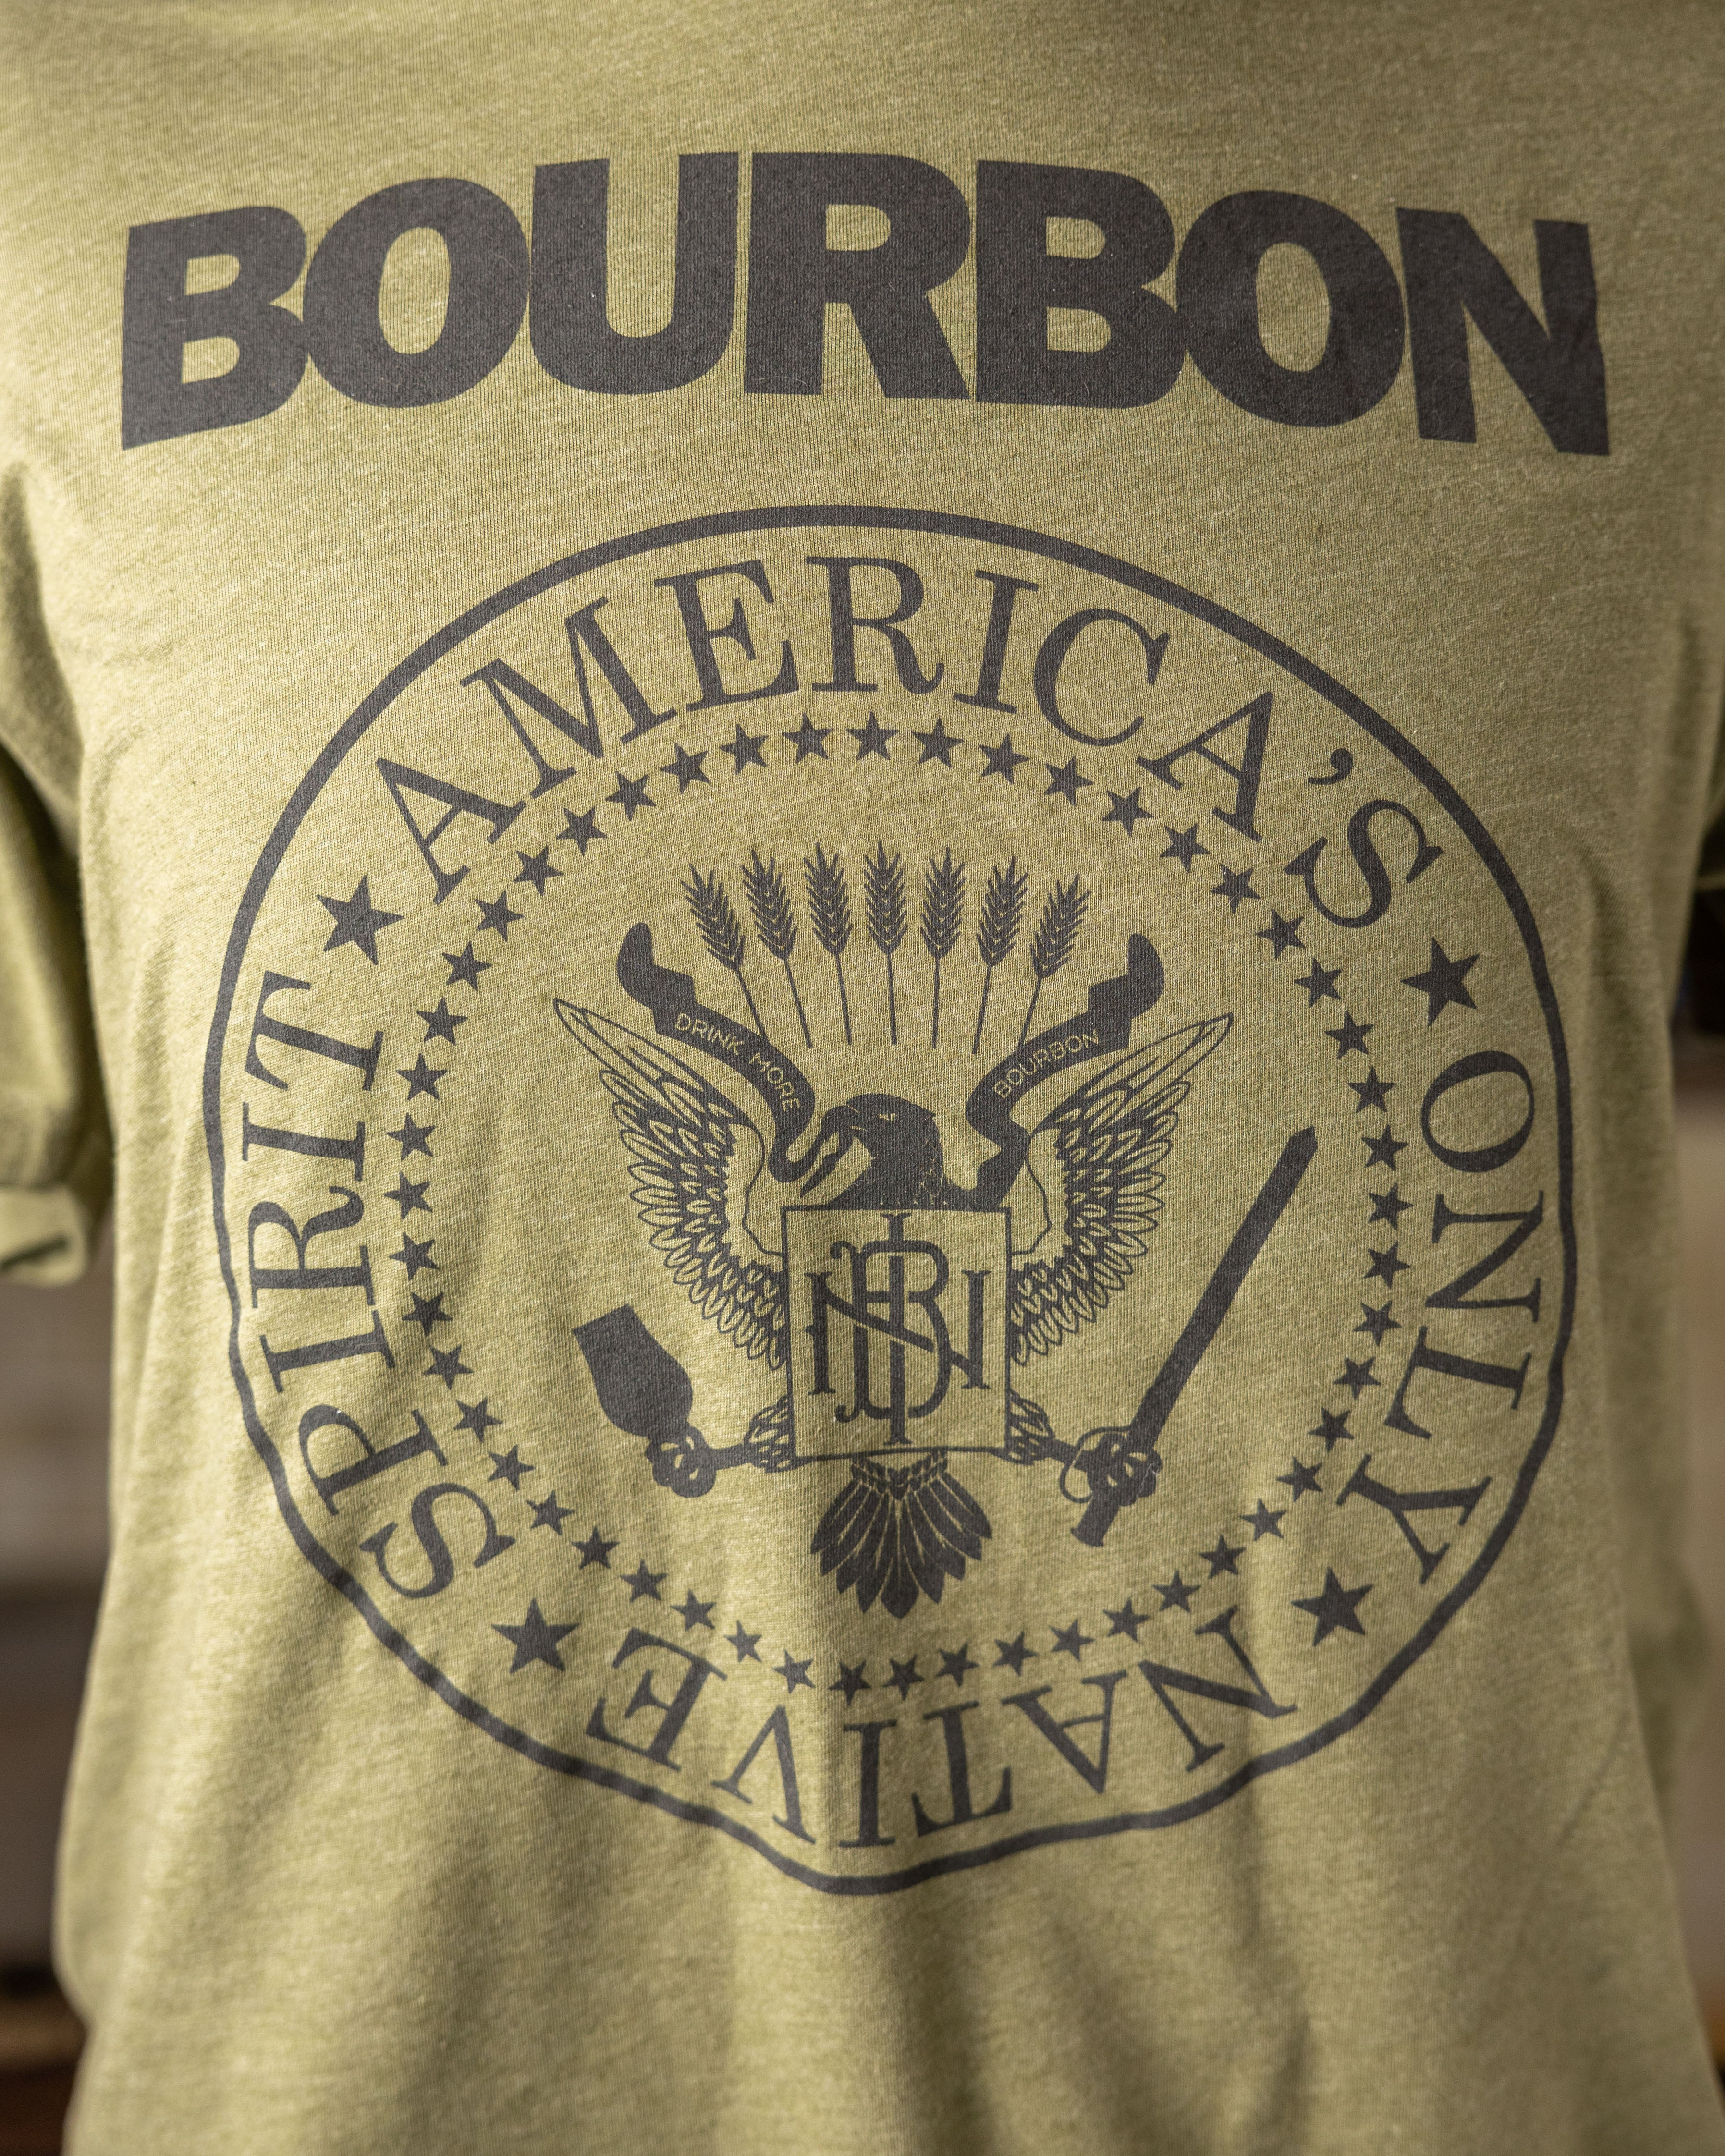 Bourbon - America’s Only Native Spirit T-shirt